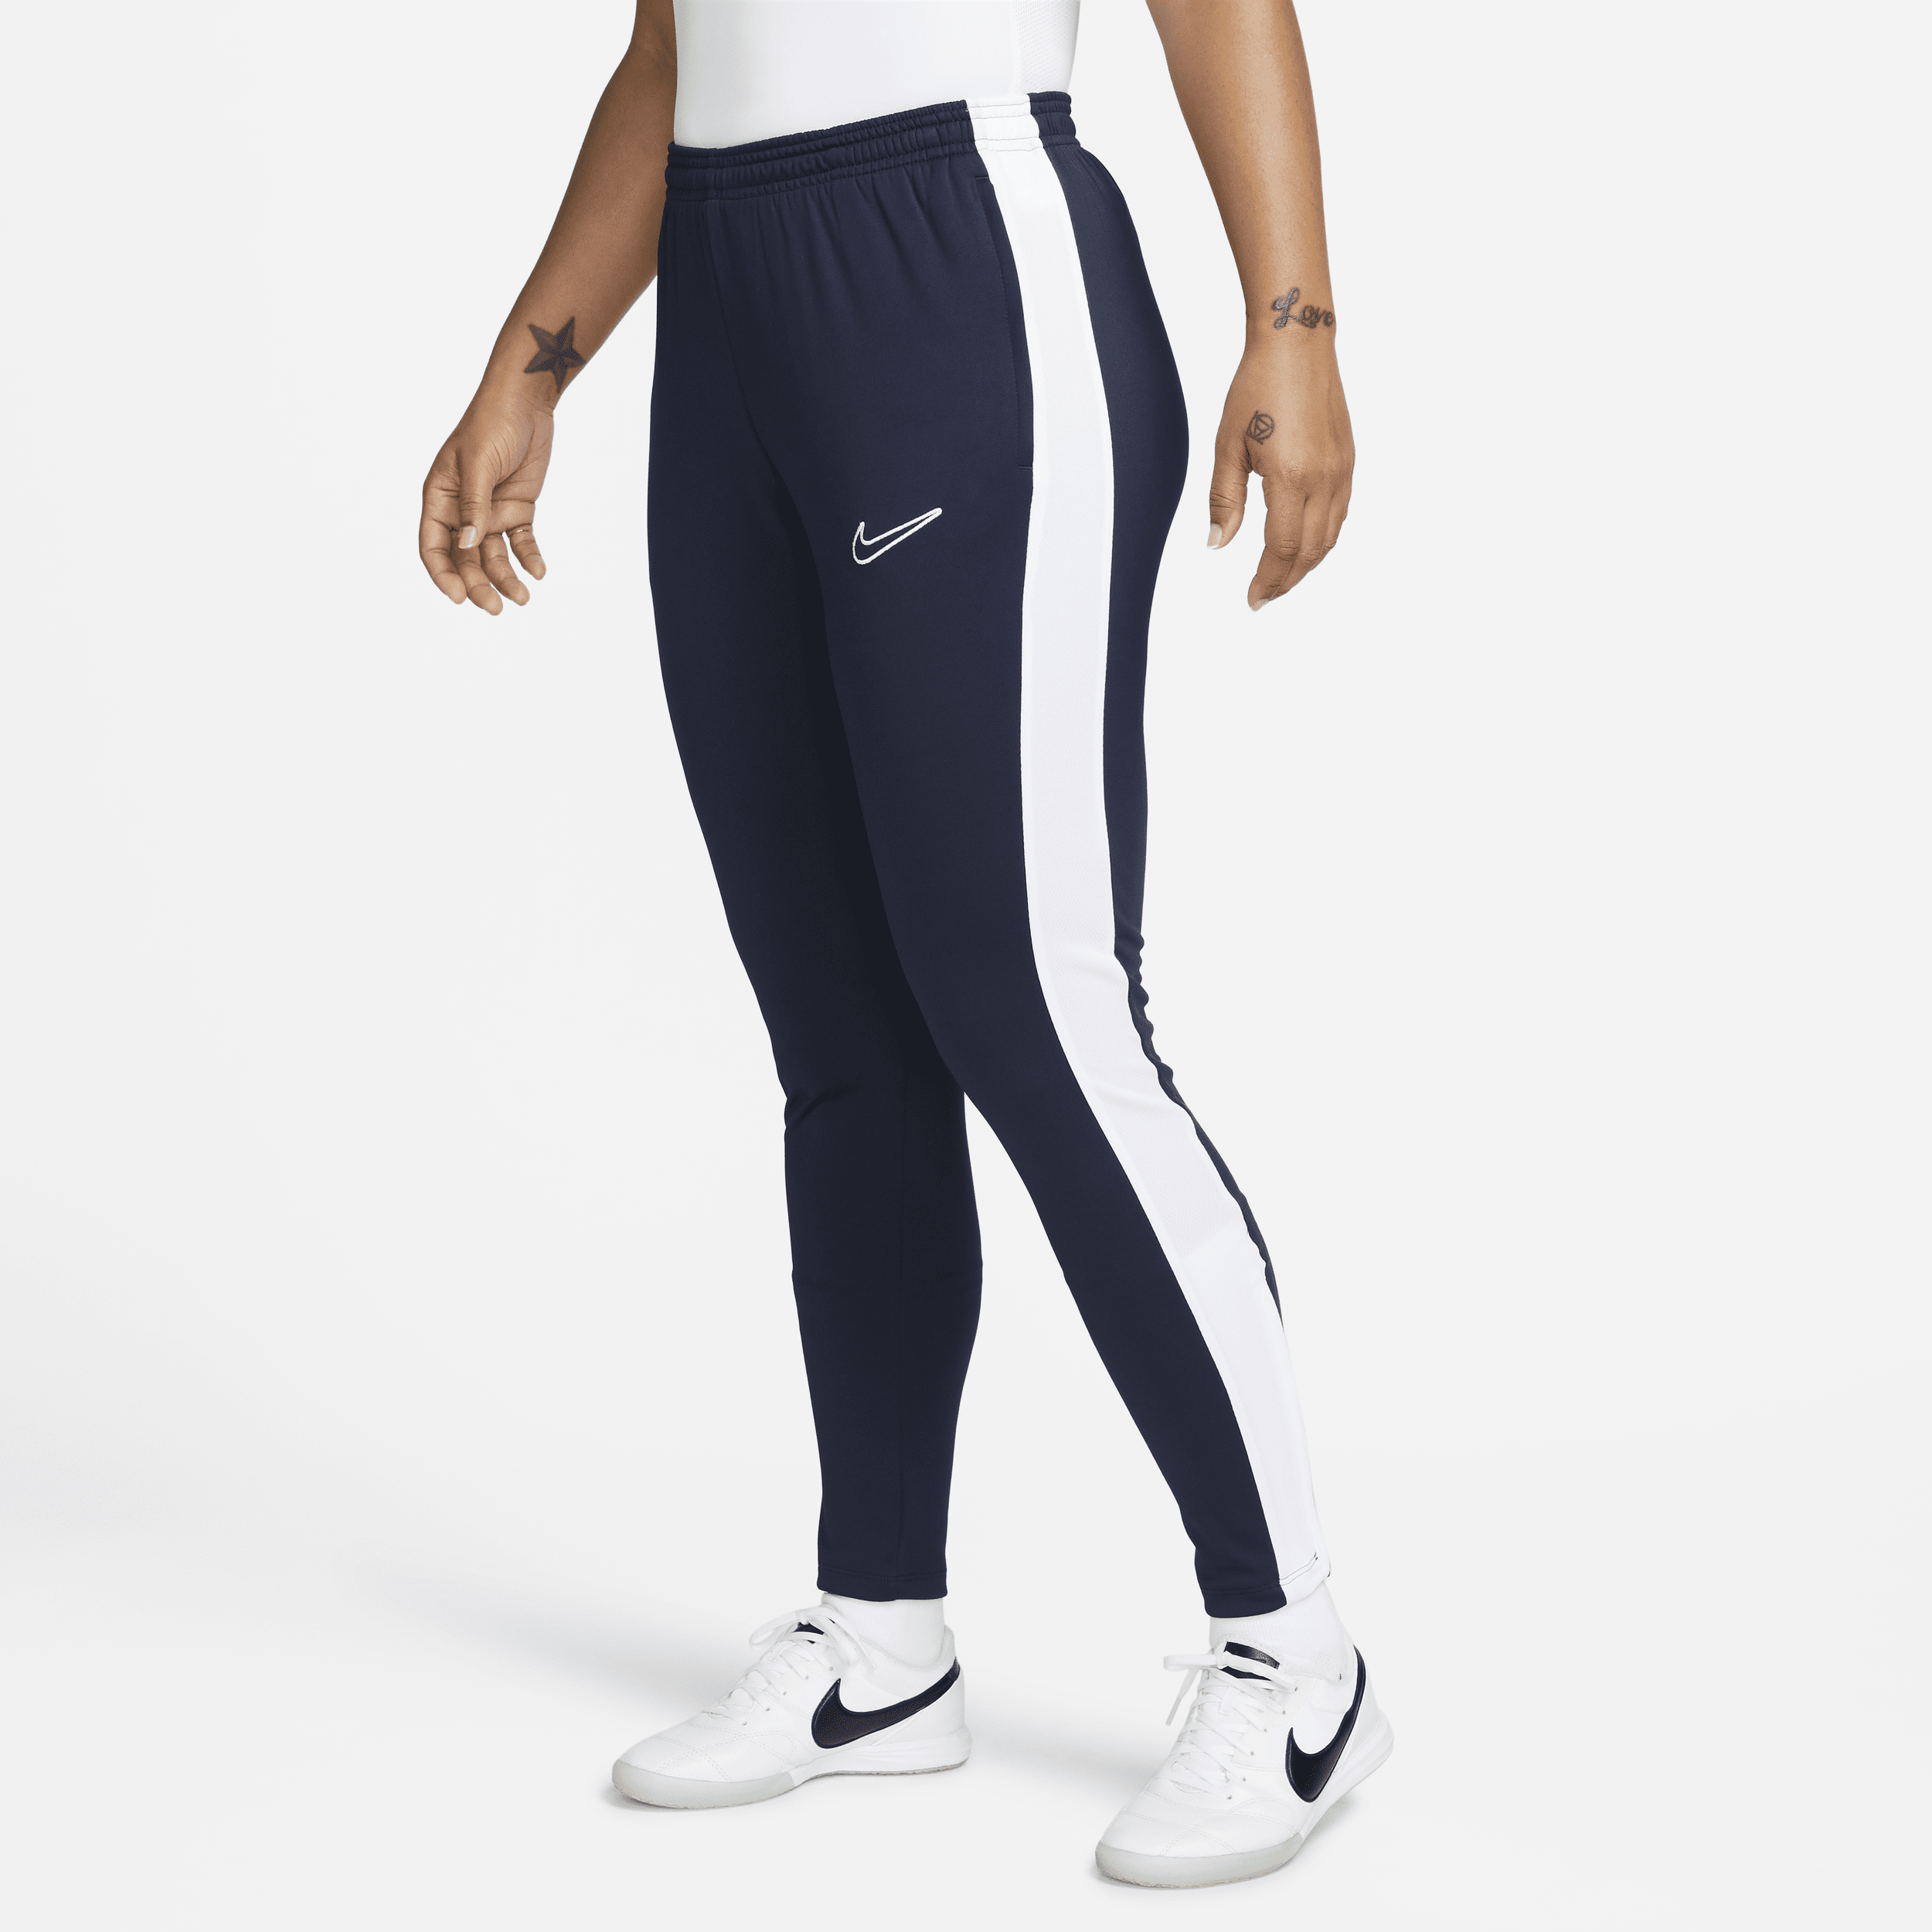 Pantaloni da calcio Nike Dri-FIT Academy - Donna - Blu